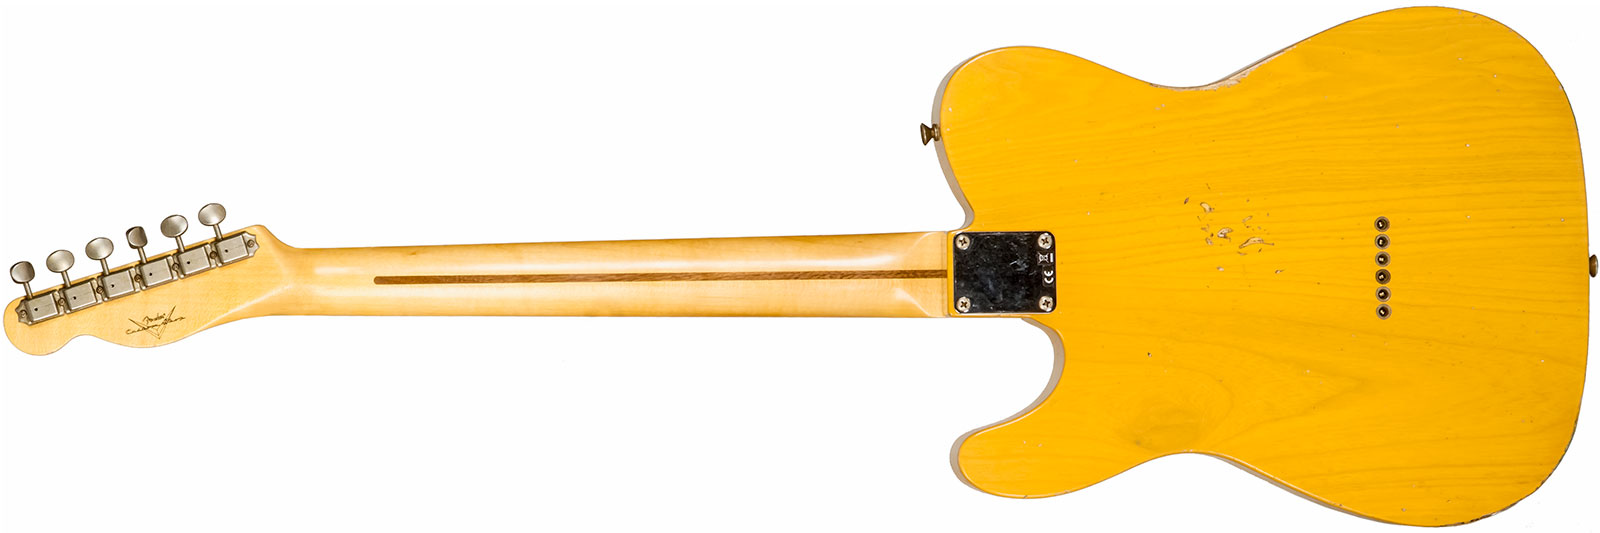 Fender Custom Shop Tele 1952 2s Ht Mn #r135225 - Relic Aged Buttercotch Blonde - Guitarra eléctrica con forma de tel - Variation 1